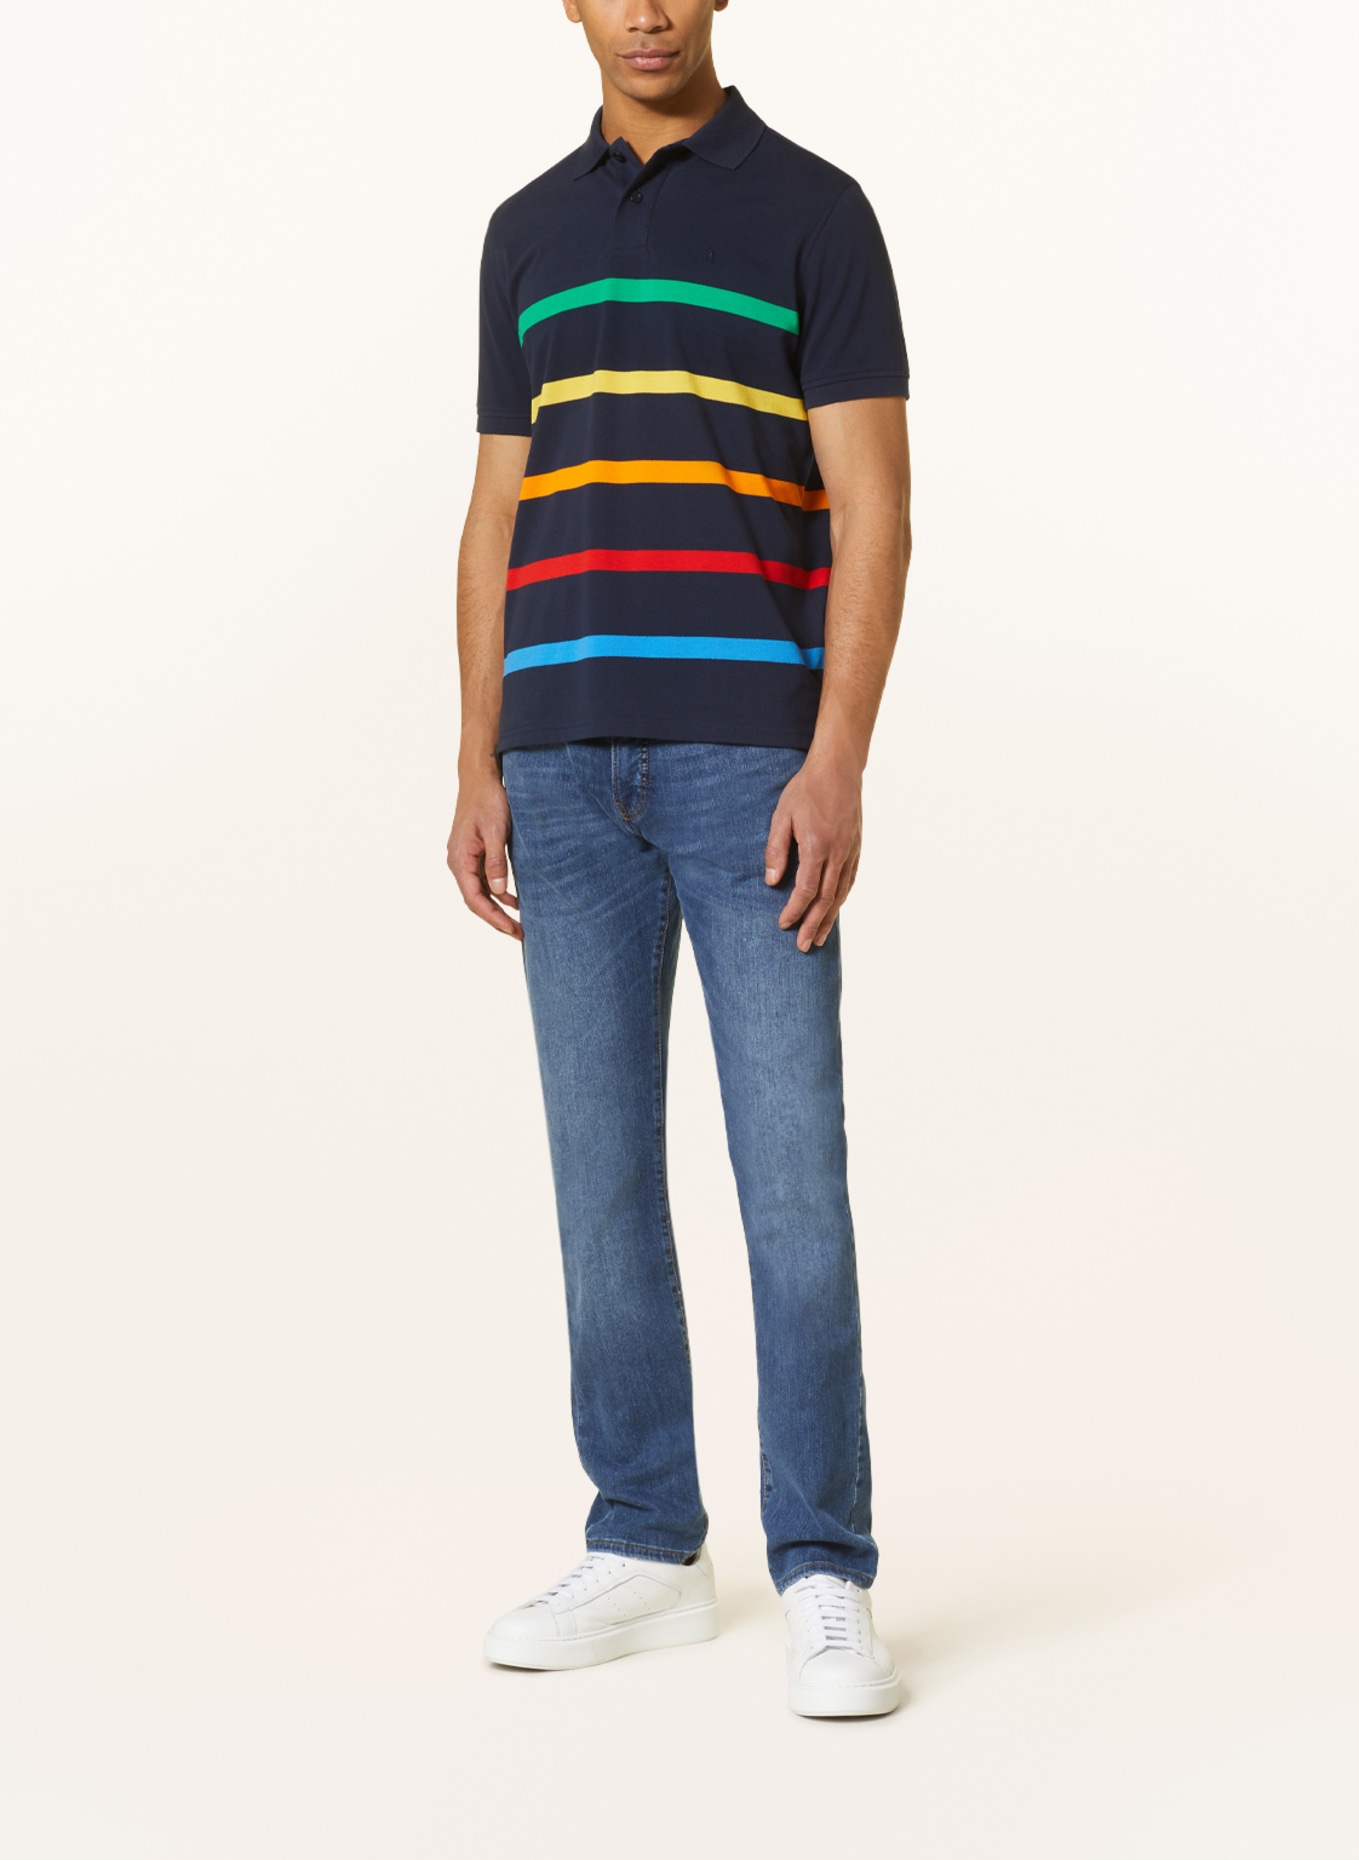 RAGMAN Piqué-Poloshirt, Farbe: DUNKELBLAU/ GRÜN/ GELB (Bild 2)